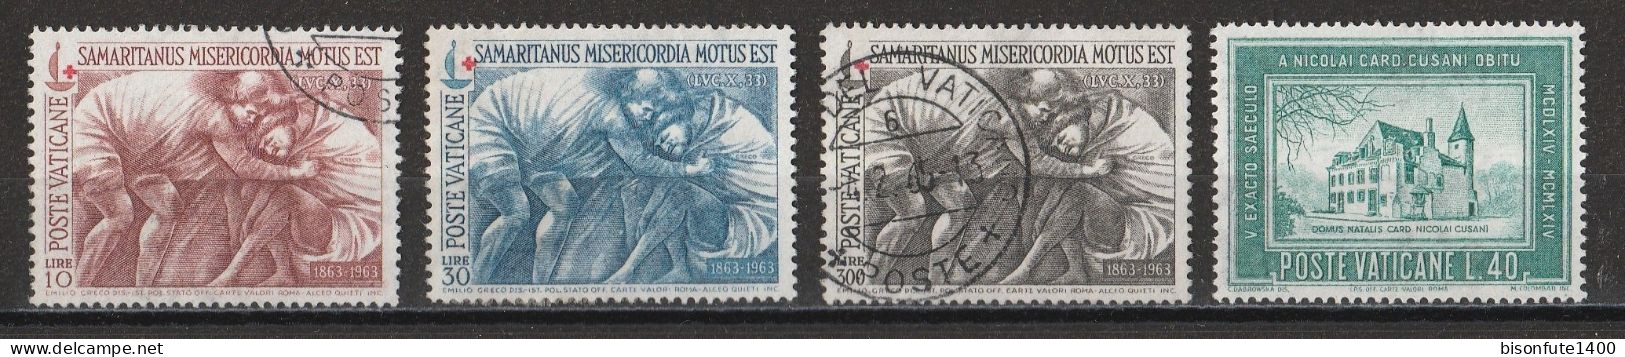 Vatican 1964 : Timbres Yvert & Tellier N° 405 - 406 - 407 - 408 - 409 - 410 - 411 - 412 - 413 Et 414 Oblitérés. - Gebraucht